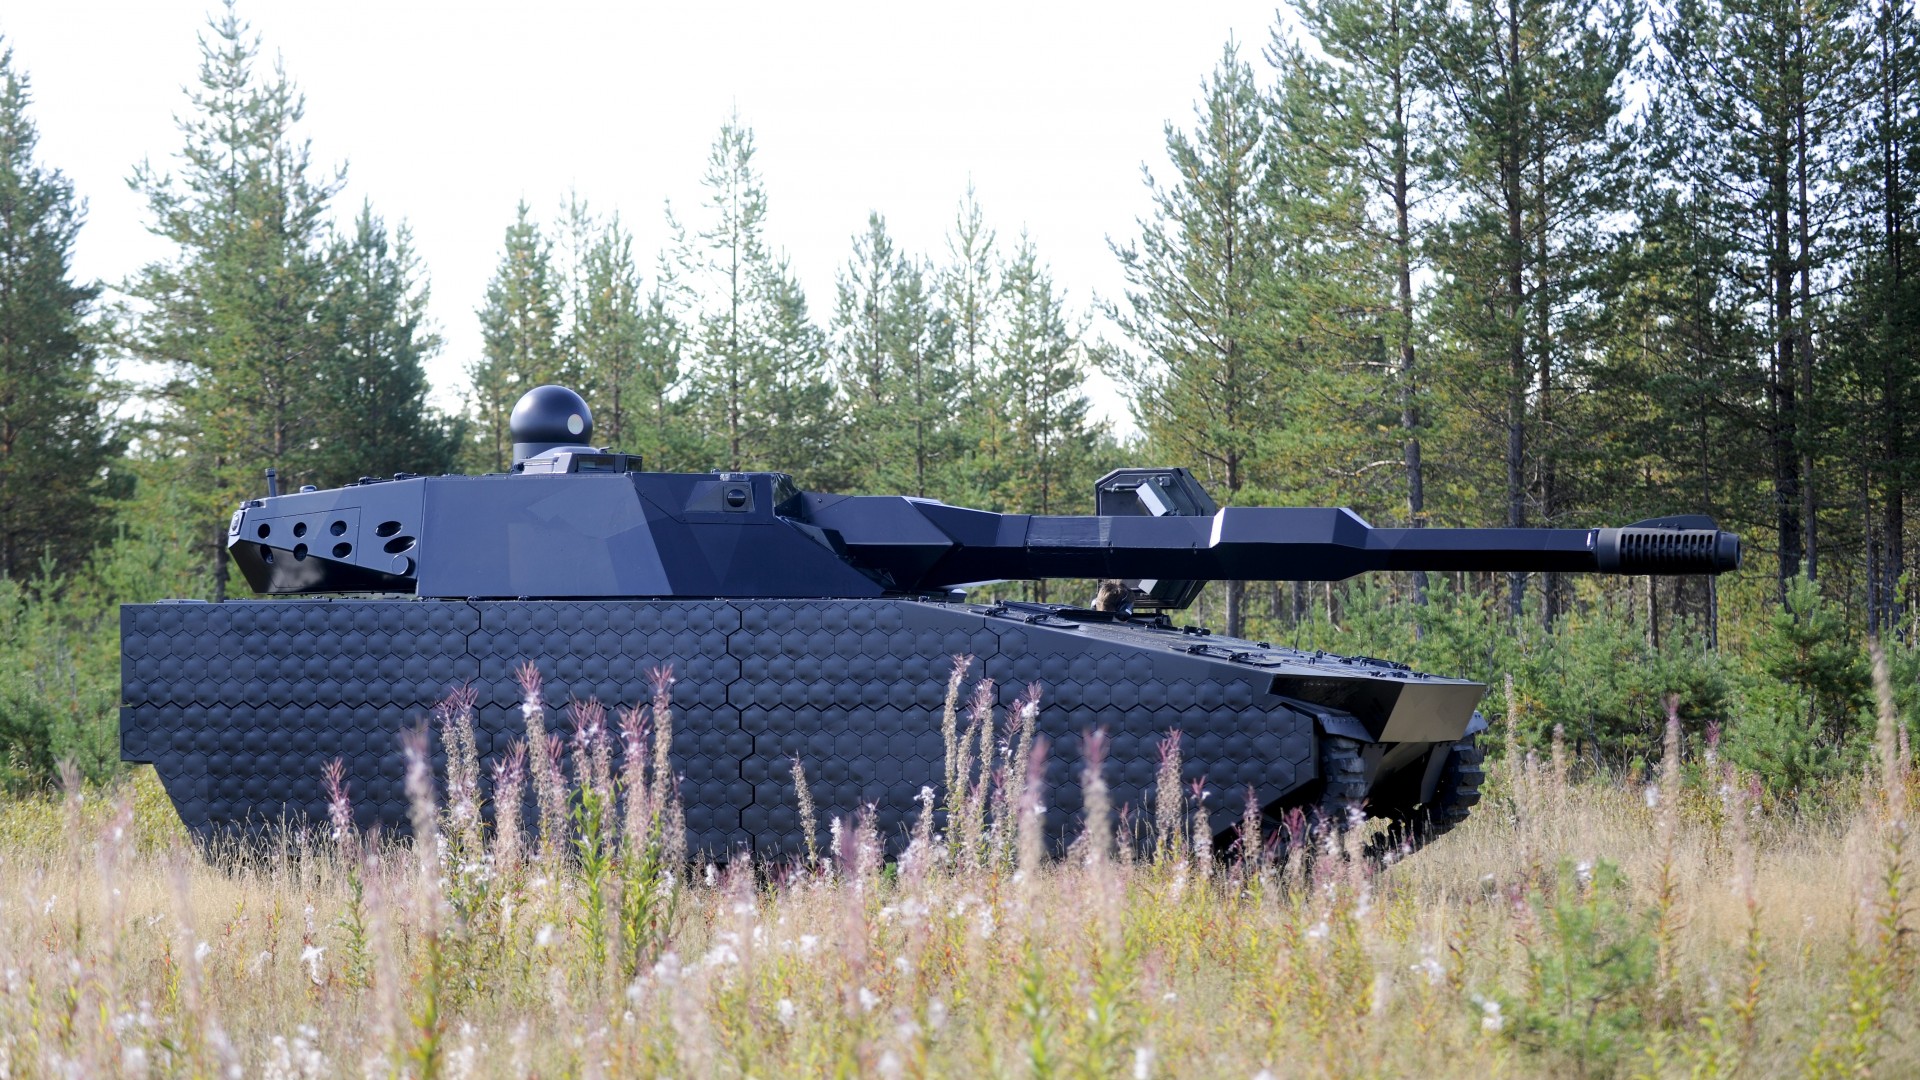 PL-01, light tank, modern weapon, BAE Systems, concept, stealth, futuristic, STANAG, Poland (horizontal)